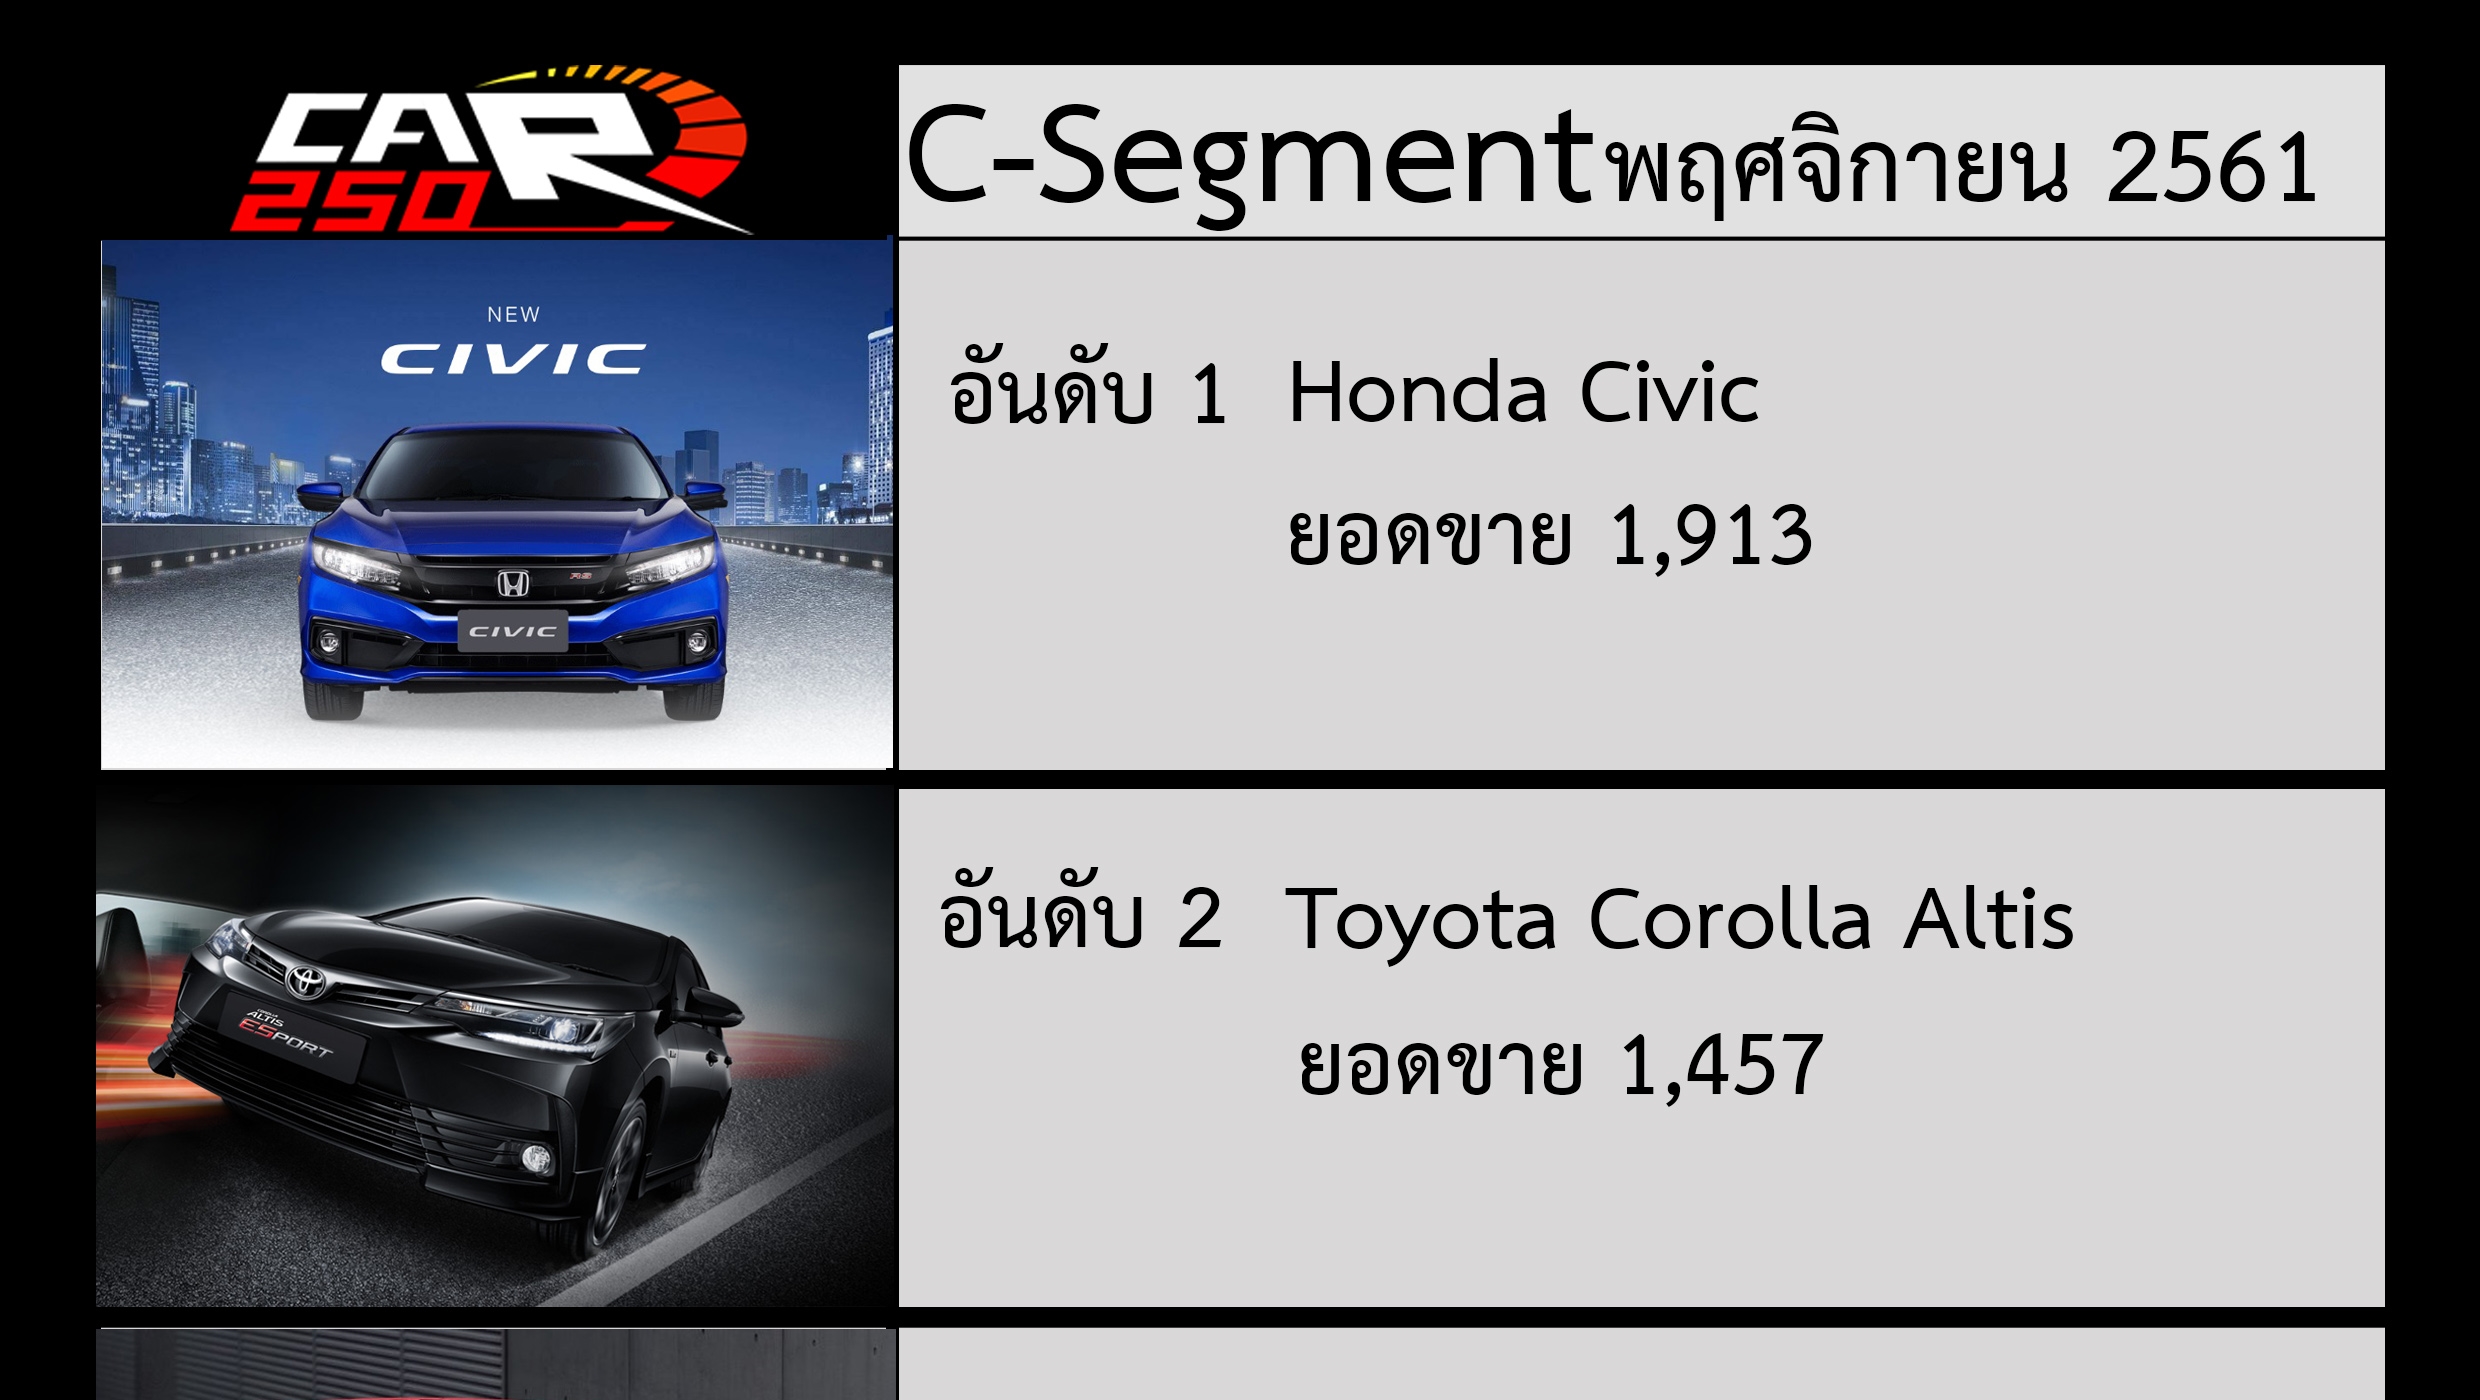 Honda Civic อันดับ 1 ในกลุ่ม C-Segment พฤศจิกายน 2561 ...